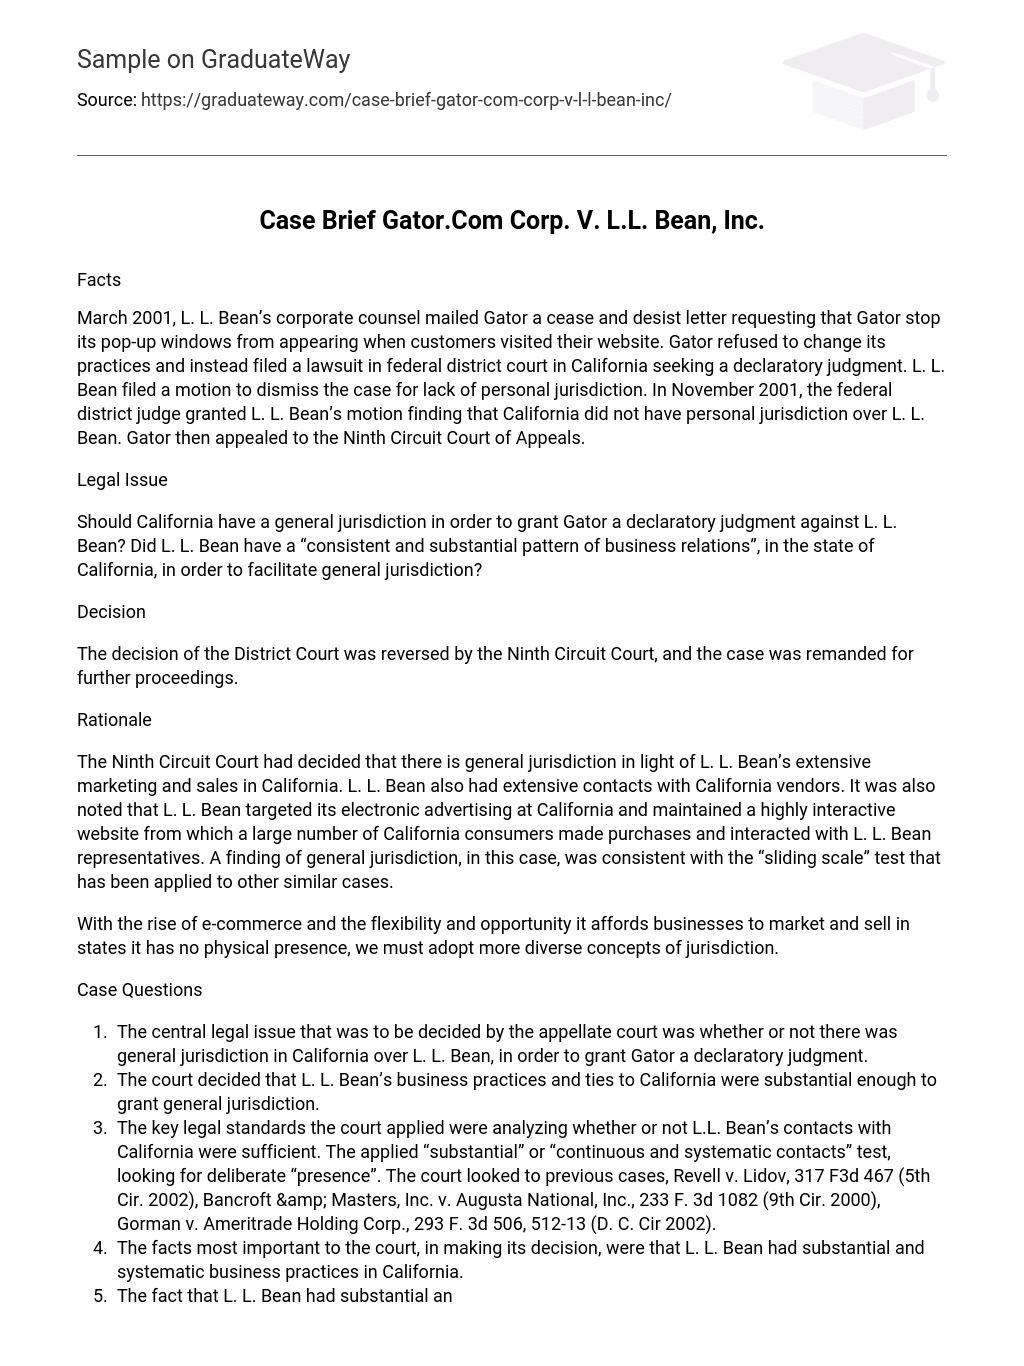 Case Brief Gator.Com Corp. V. L.L. Bean, Inc.